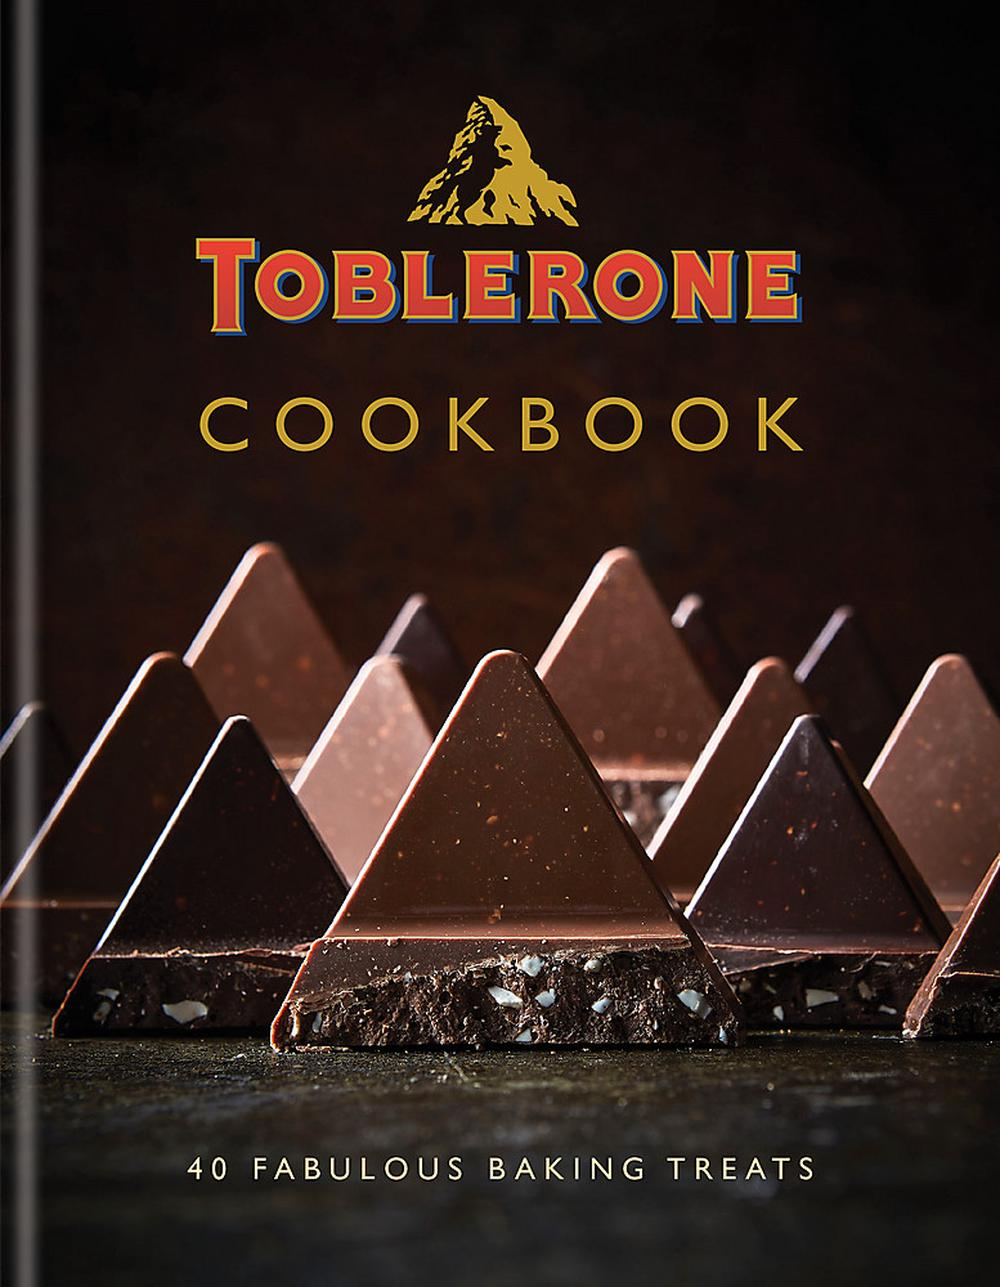 Toblerone Cook Book